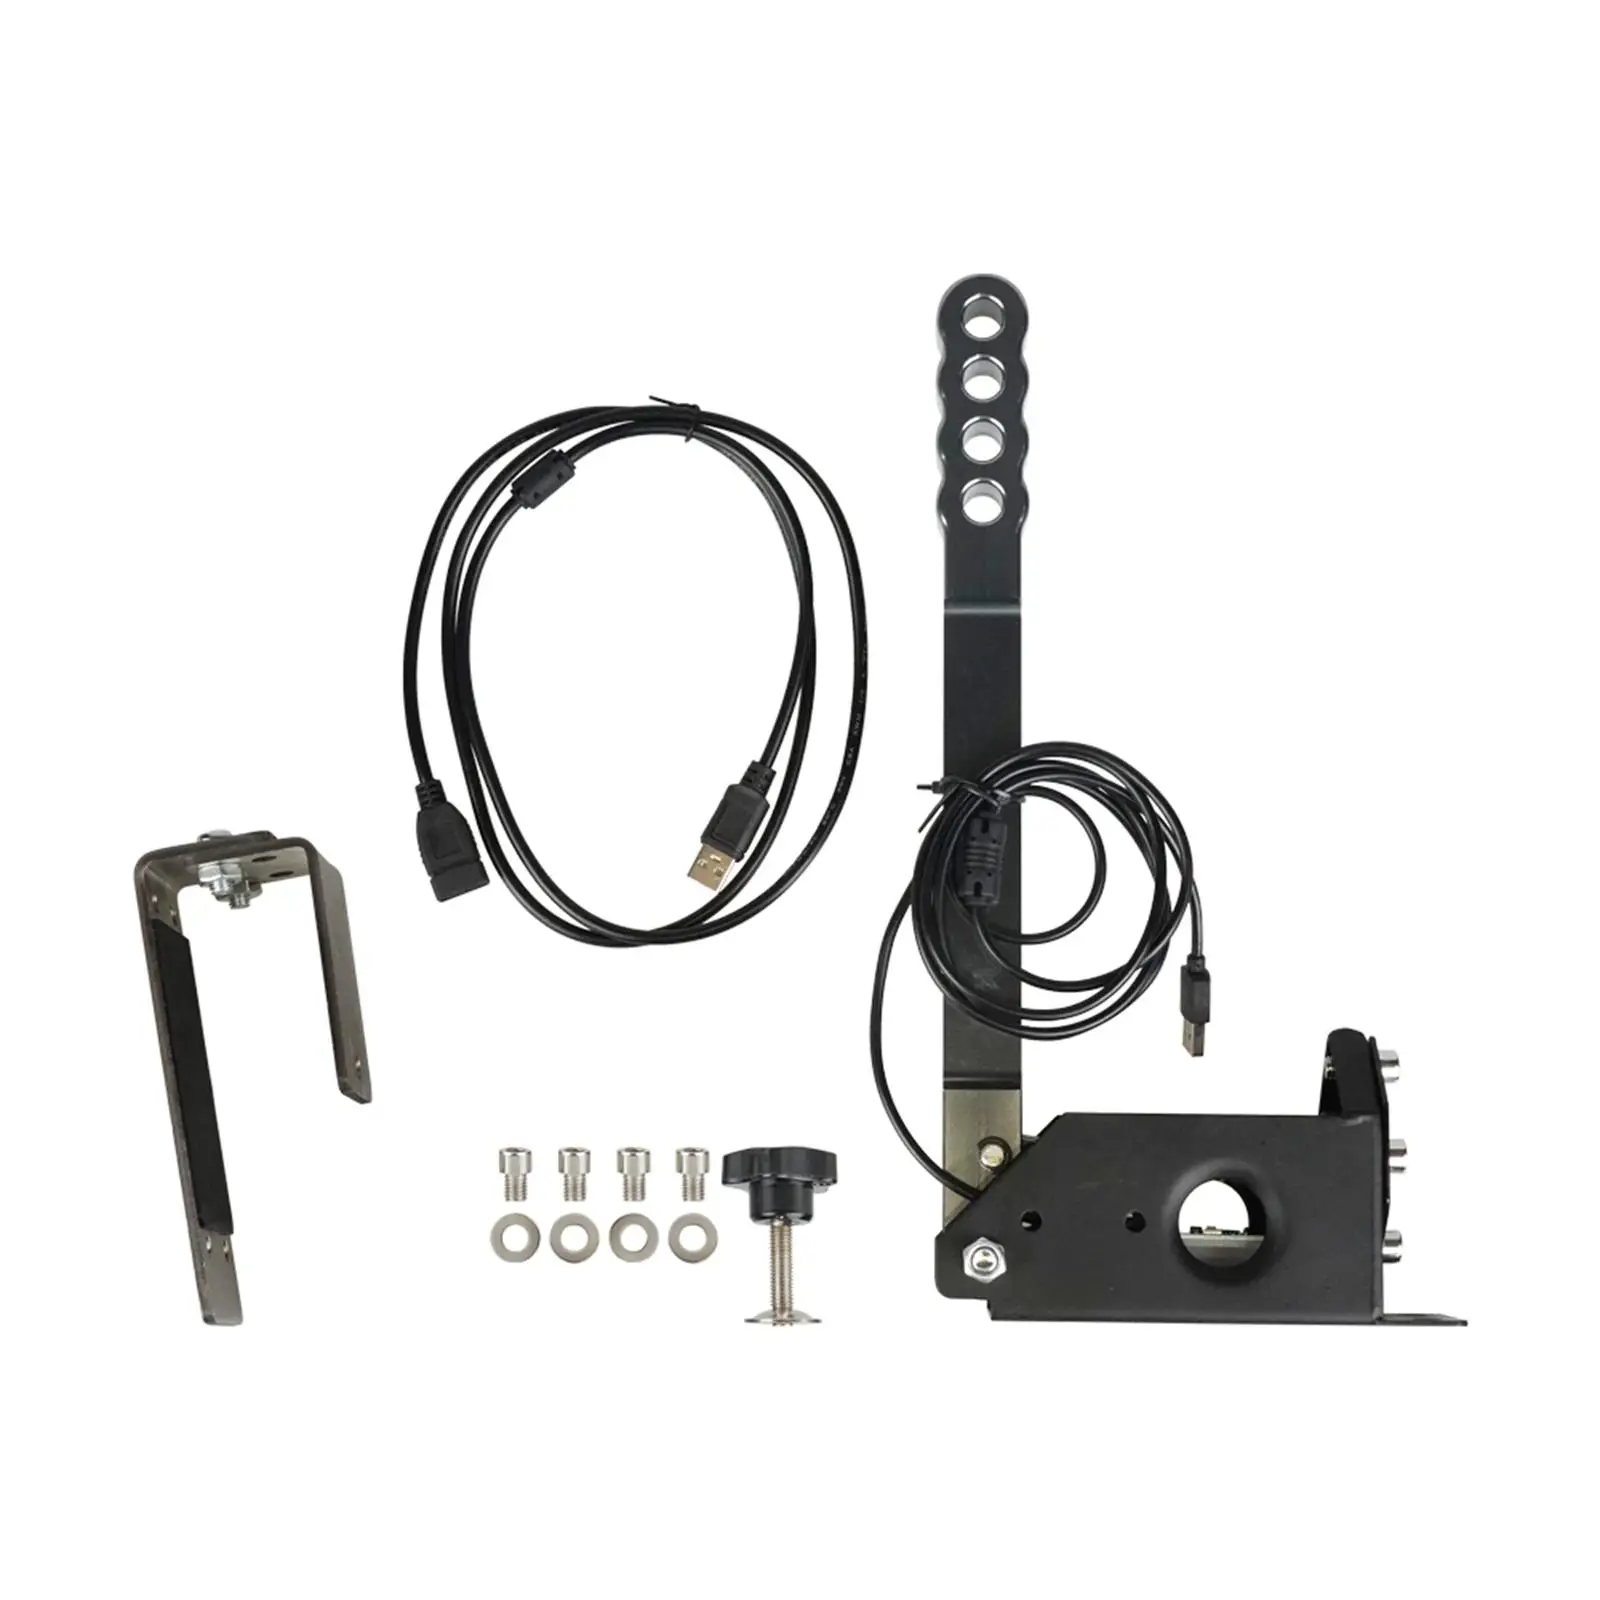 Handbrake Hall Sensor Durable with Fixing Clip Anti Wear Premium for Logitech G29 G27 G25 PC Racing Games